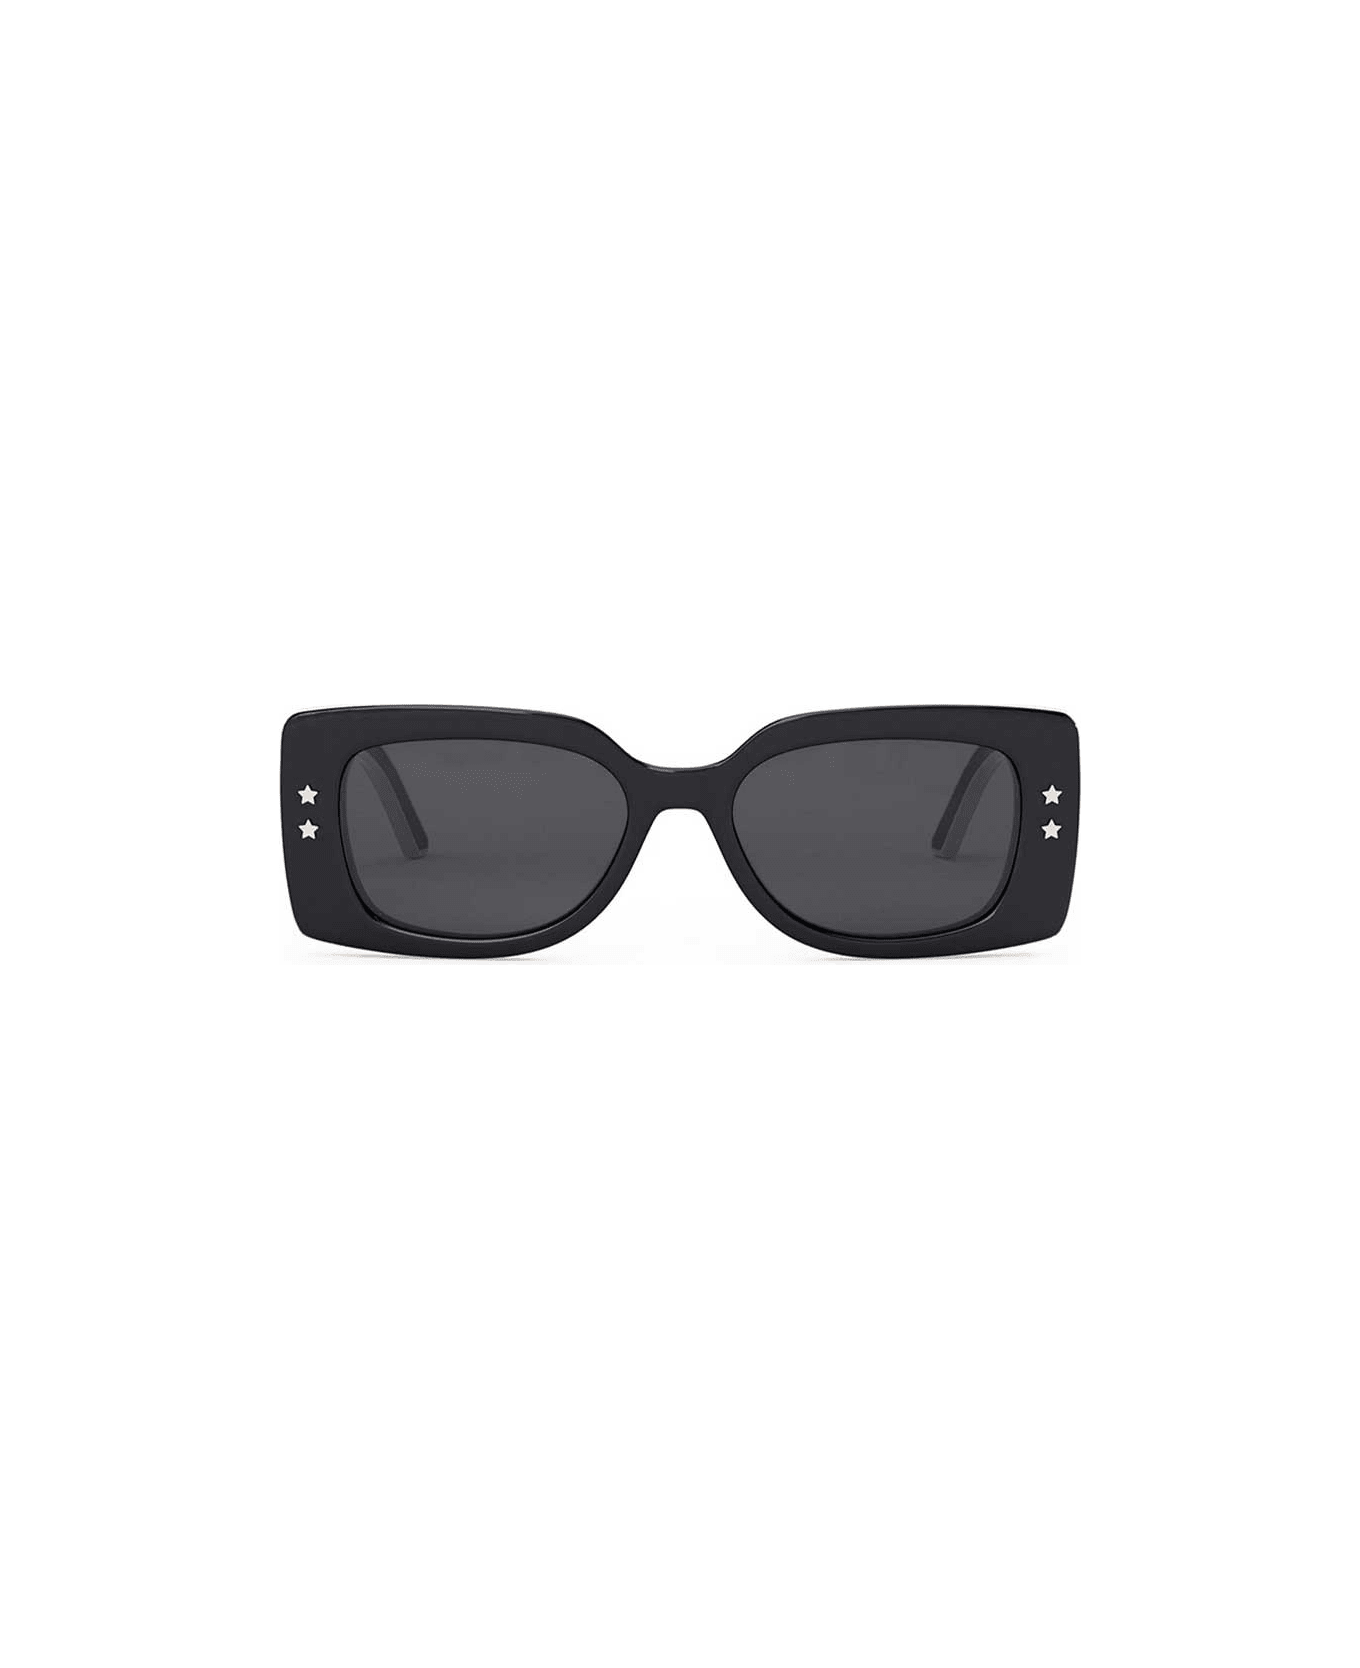 Dior Eyewear Sunglasses - Nero/Nero サングラス